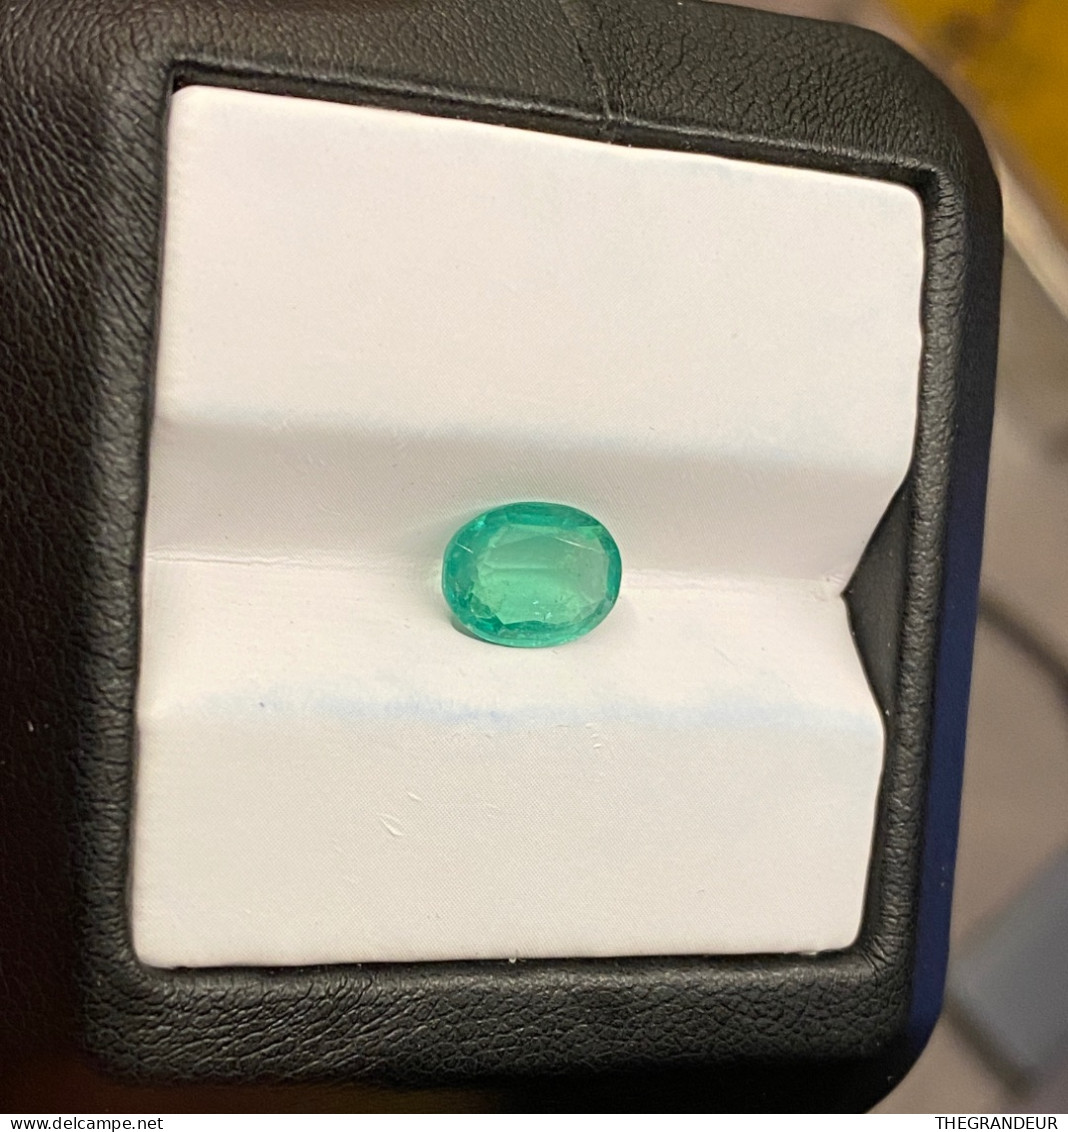 Natural Emerald 1.39 Carat Loose Gemstone From Zambia - Emerald